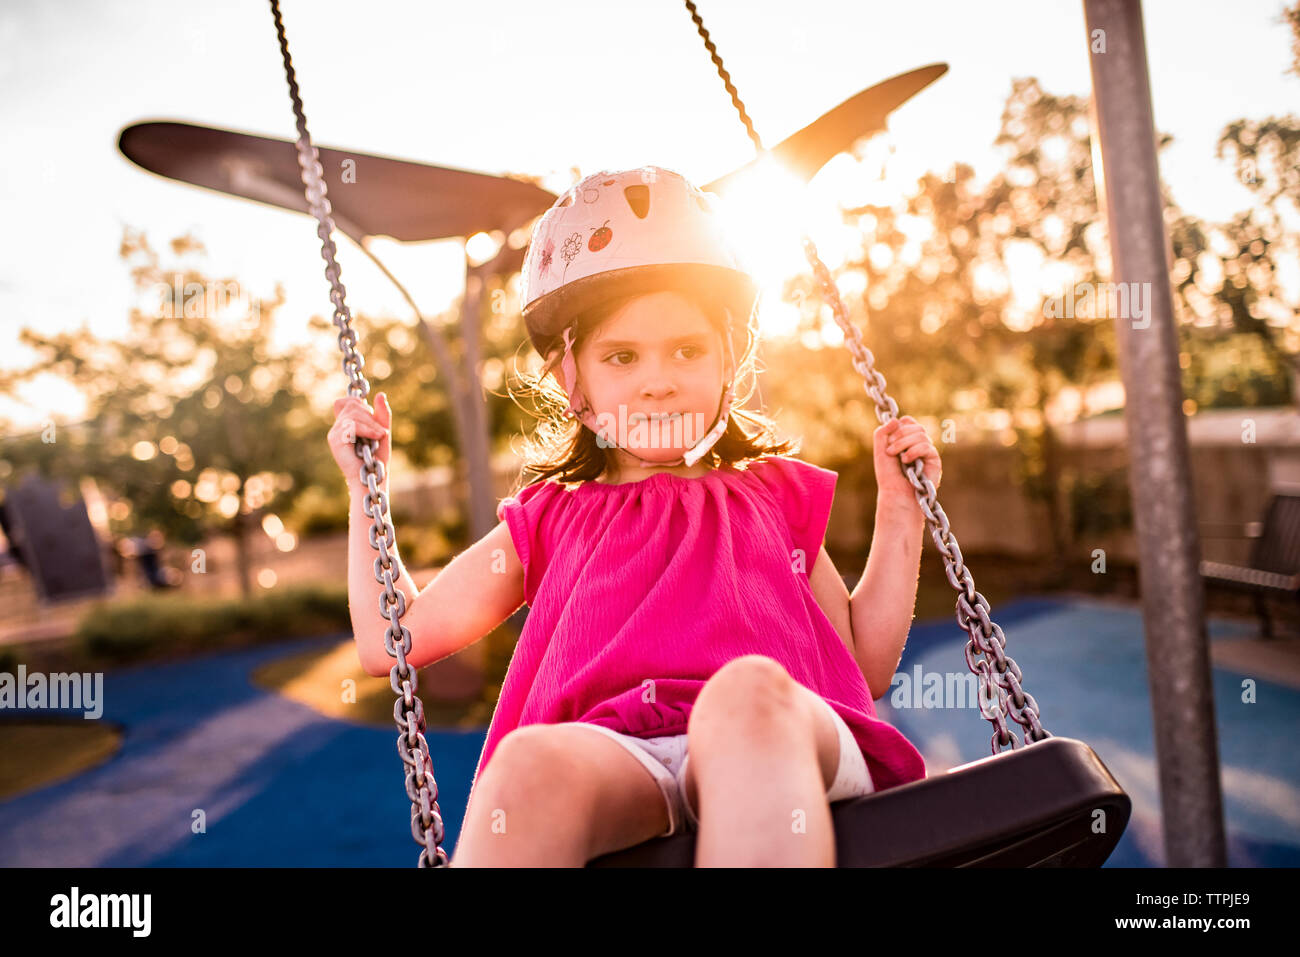 Girl wearing helmet while swinging at playground Stock Photo